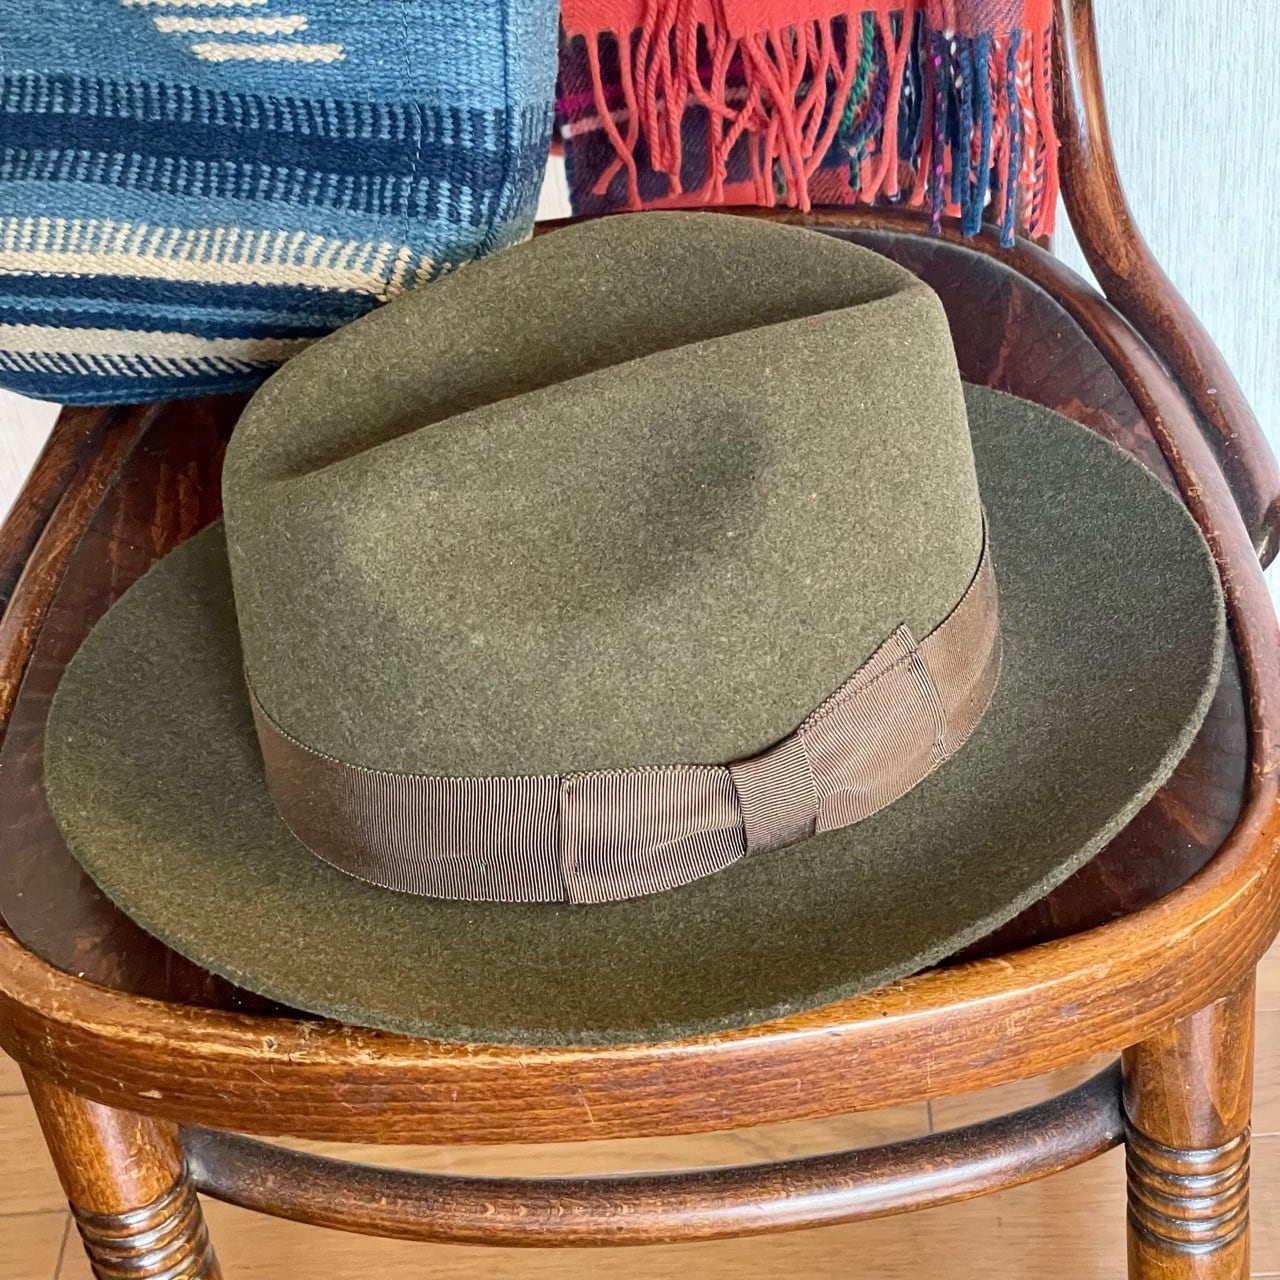 RRL ハット　Wool Felt  Hat made in Italy表記721